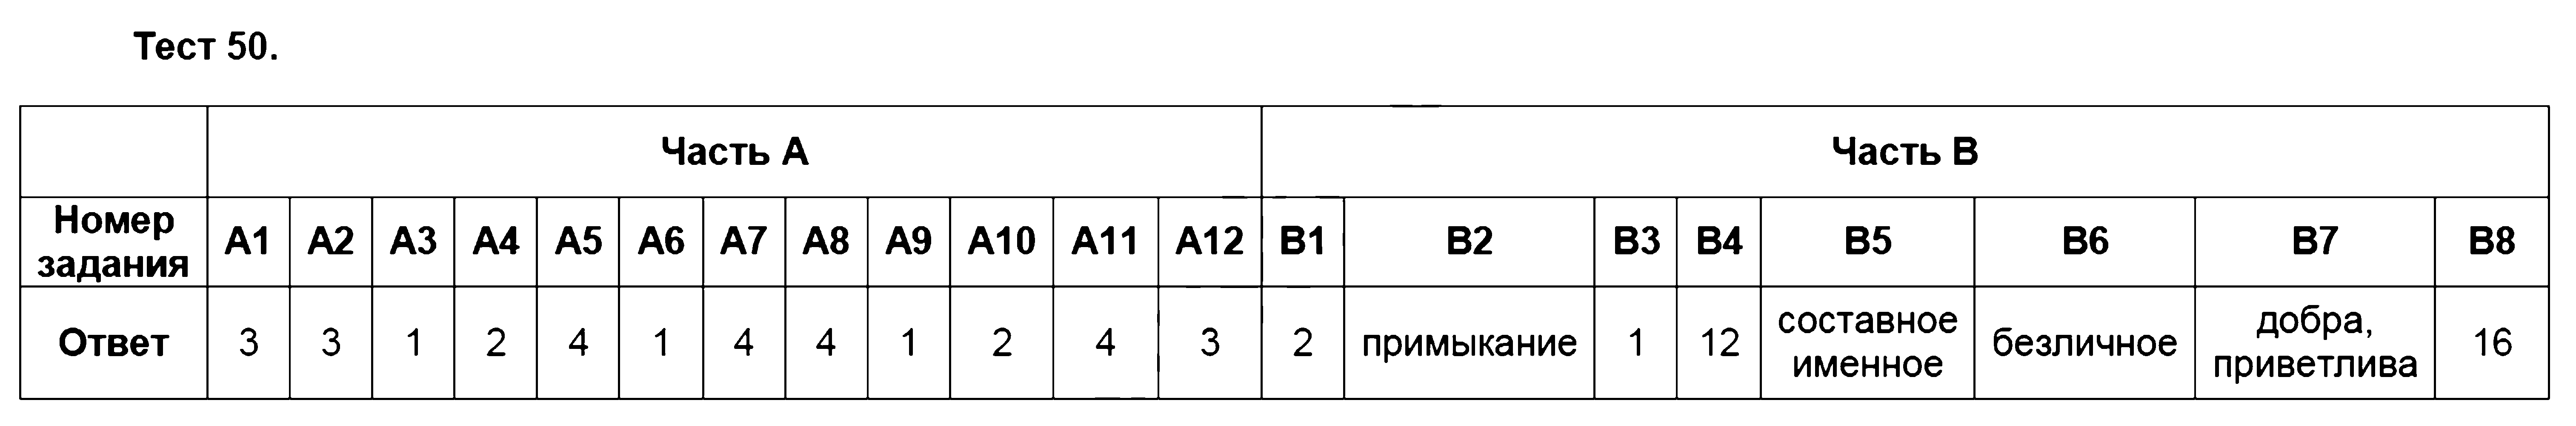 ГДЗ Русский язык 8 класс - Тест 50